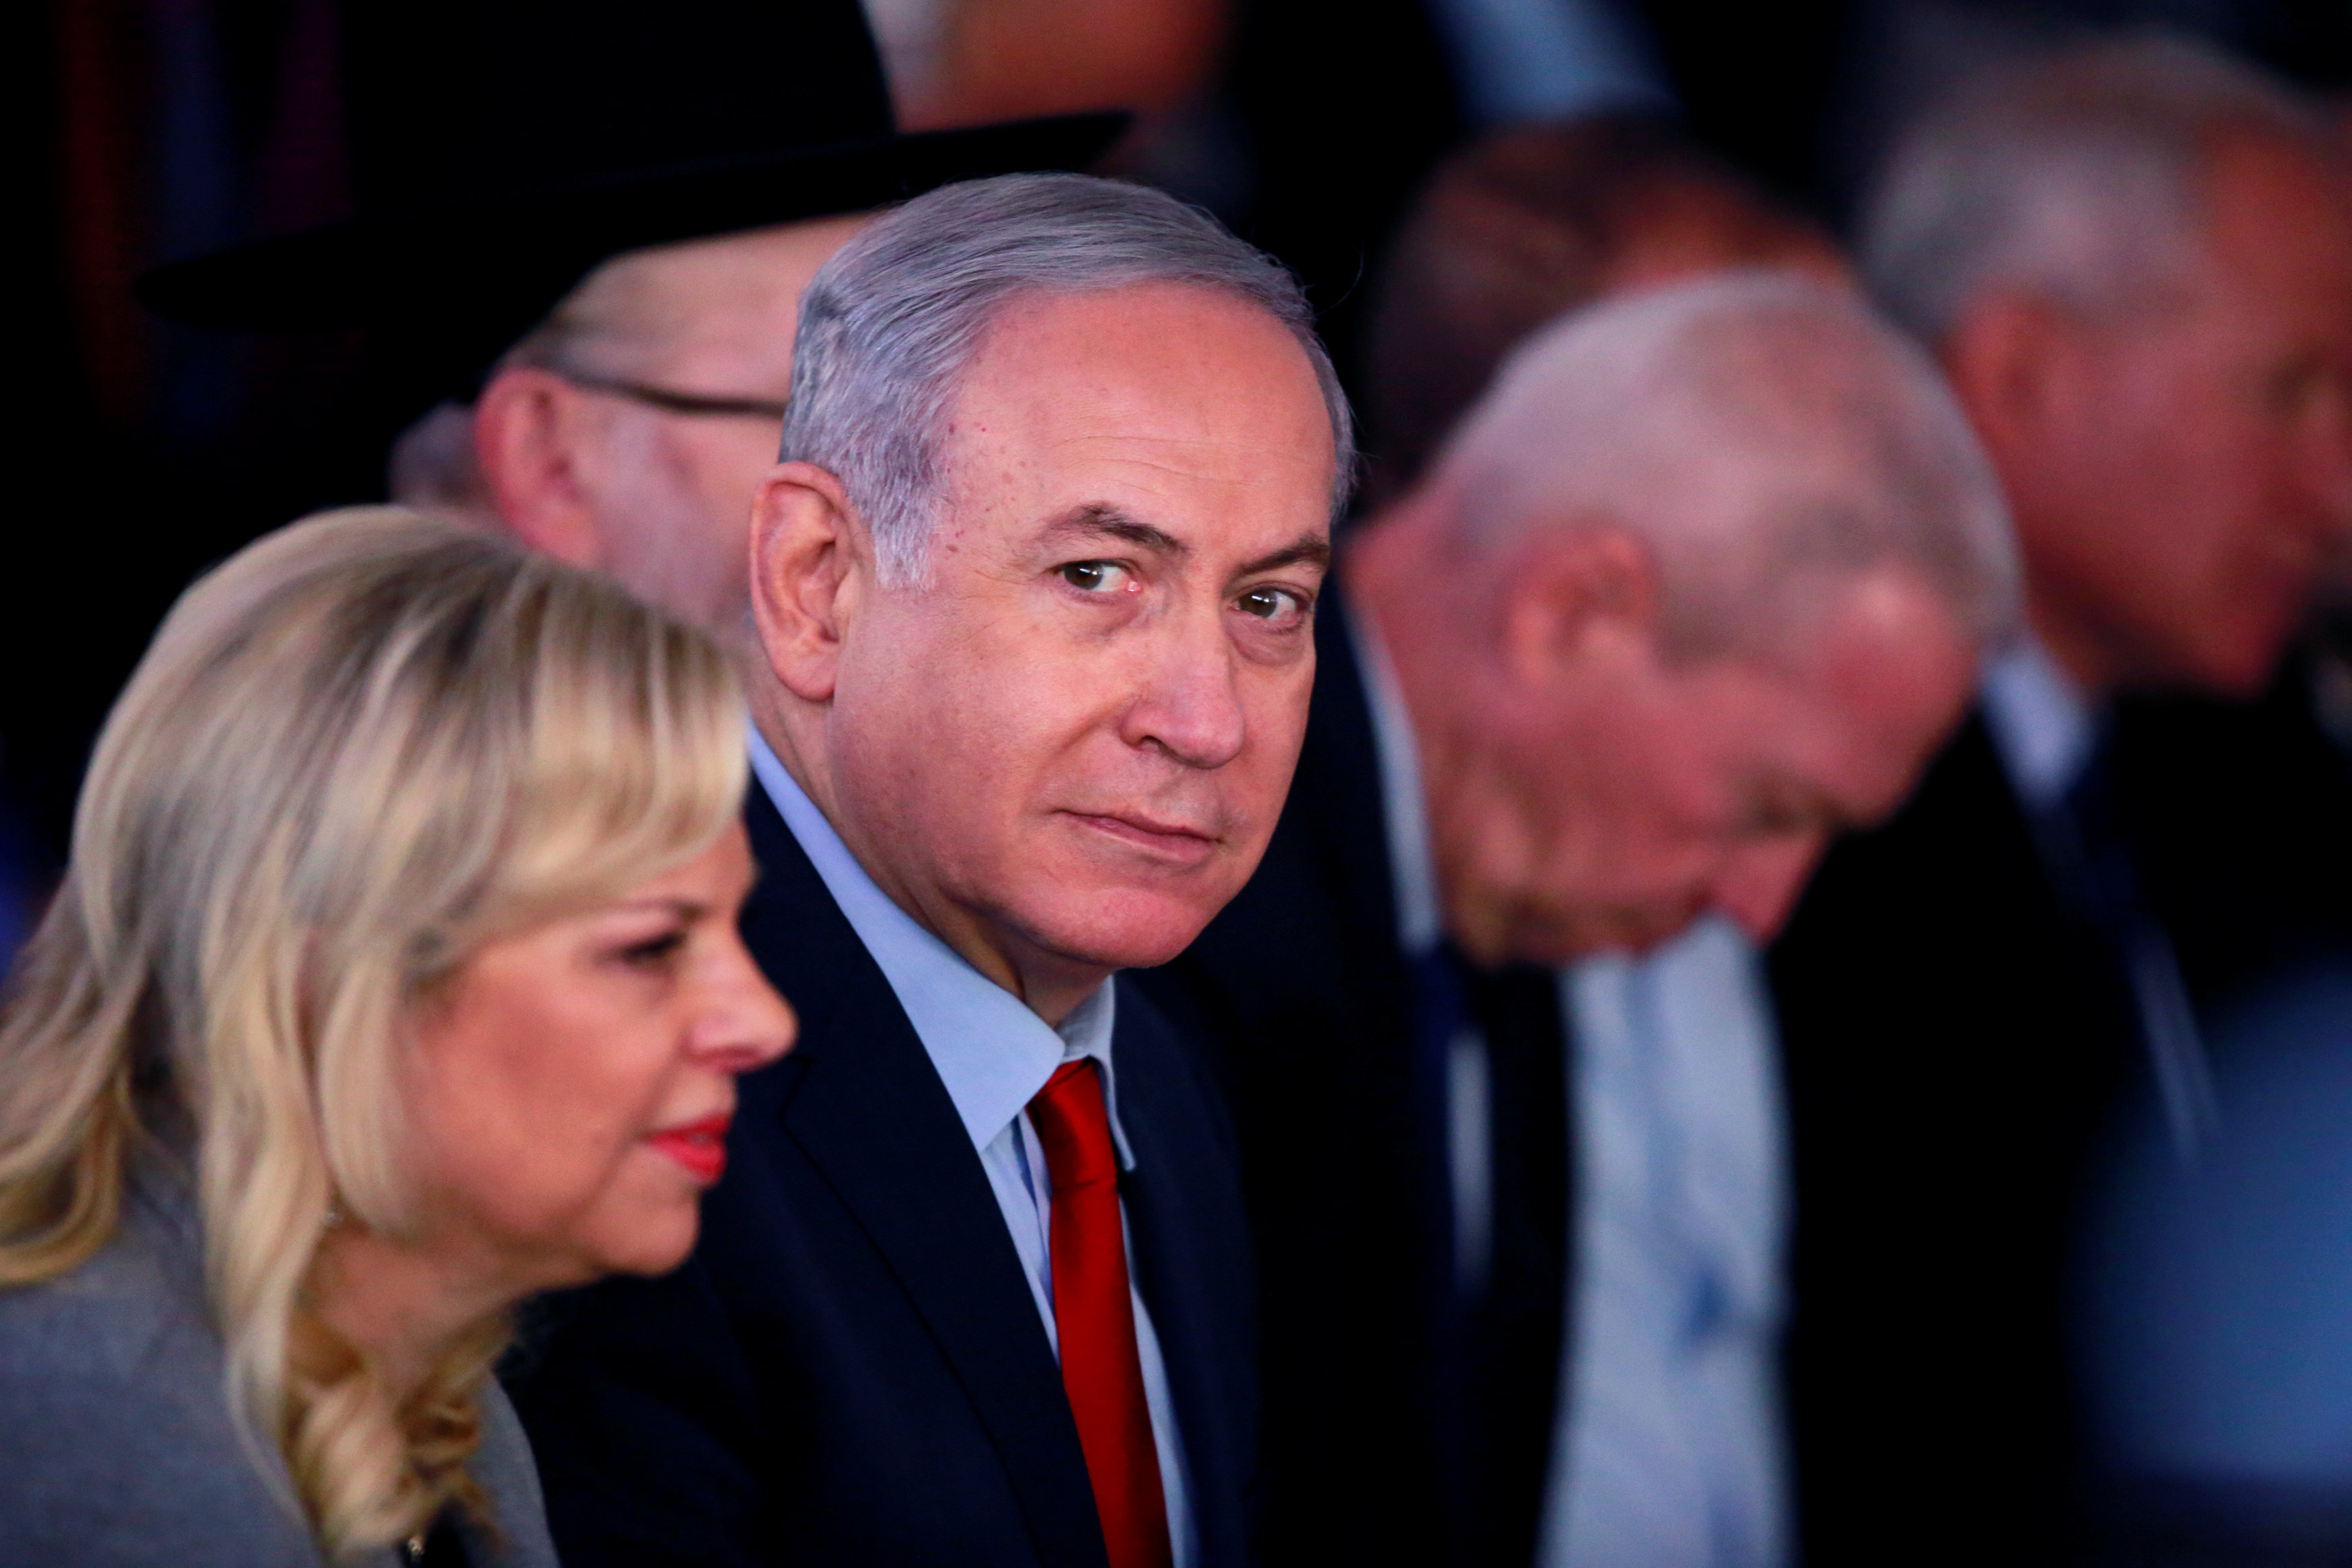 Israeli police question Netanyahu in telecom corruption case